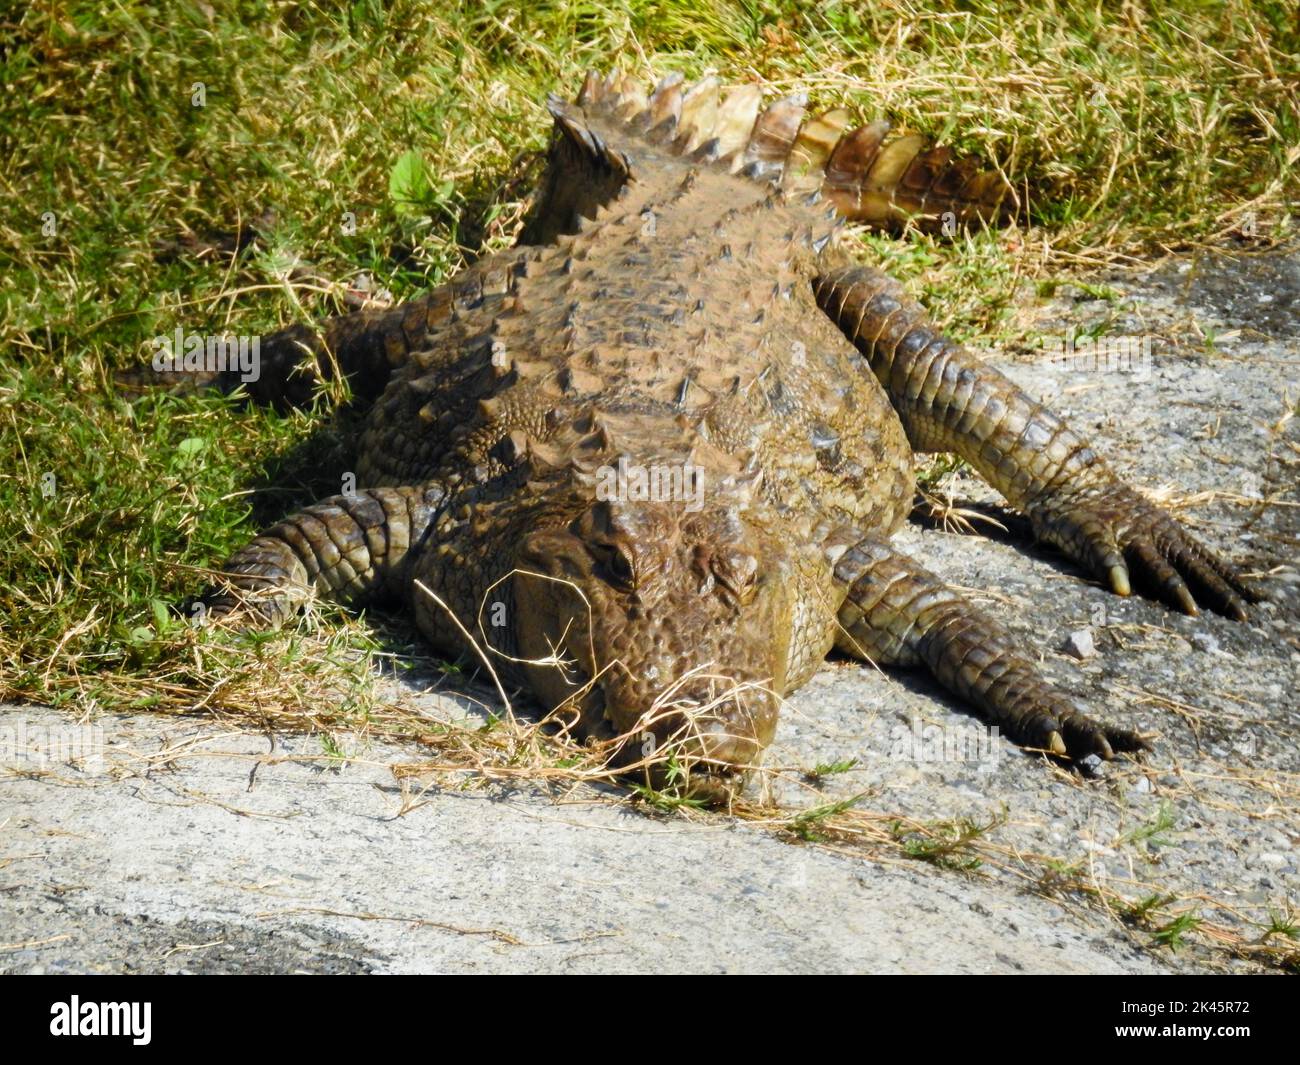 August 18th 2018, dehradun City Uttarakhand India. Alligators in captivity at Dehradun Malsi Zoo. Stock Photo